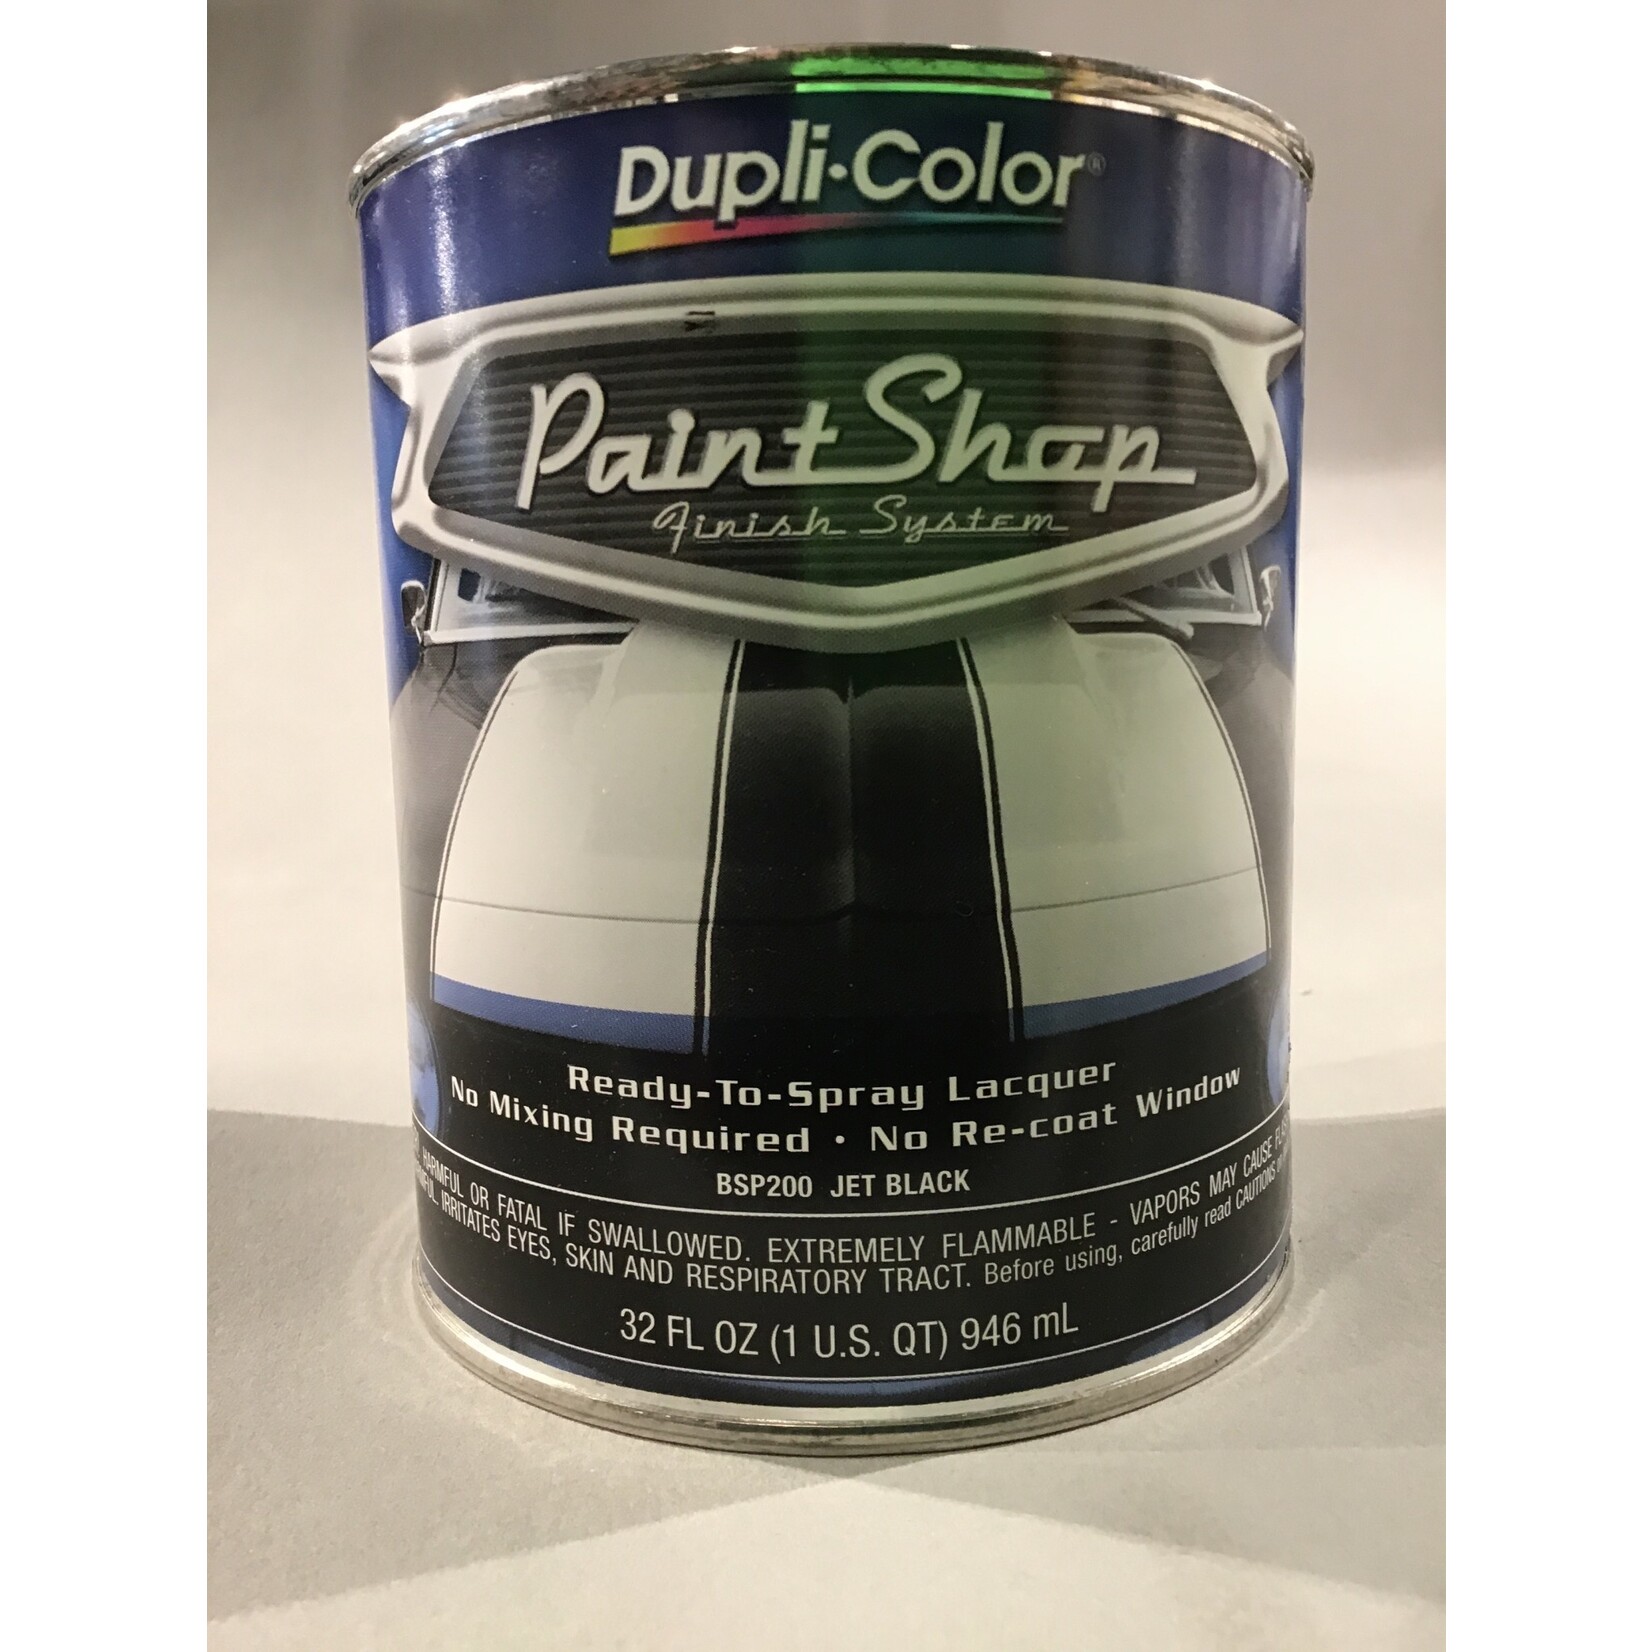 Dupli-Color Paint Shop Finish System - Jet Black